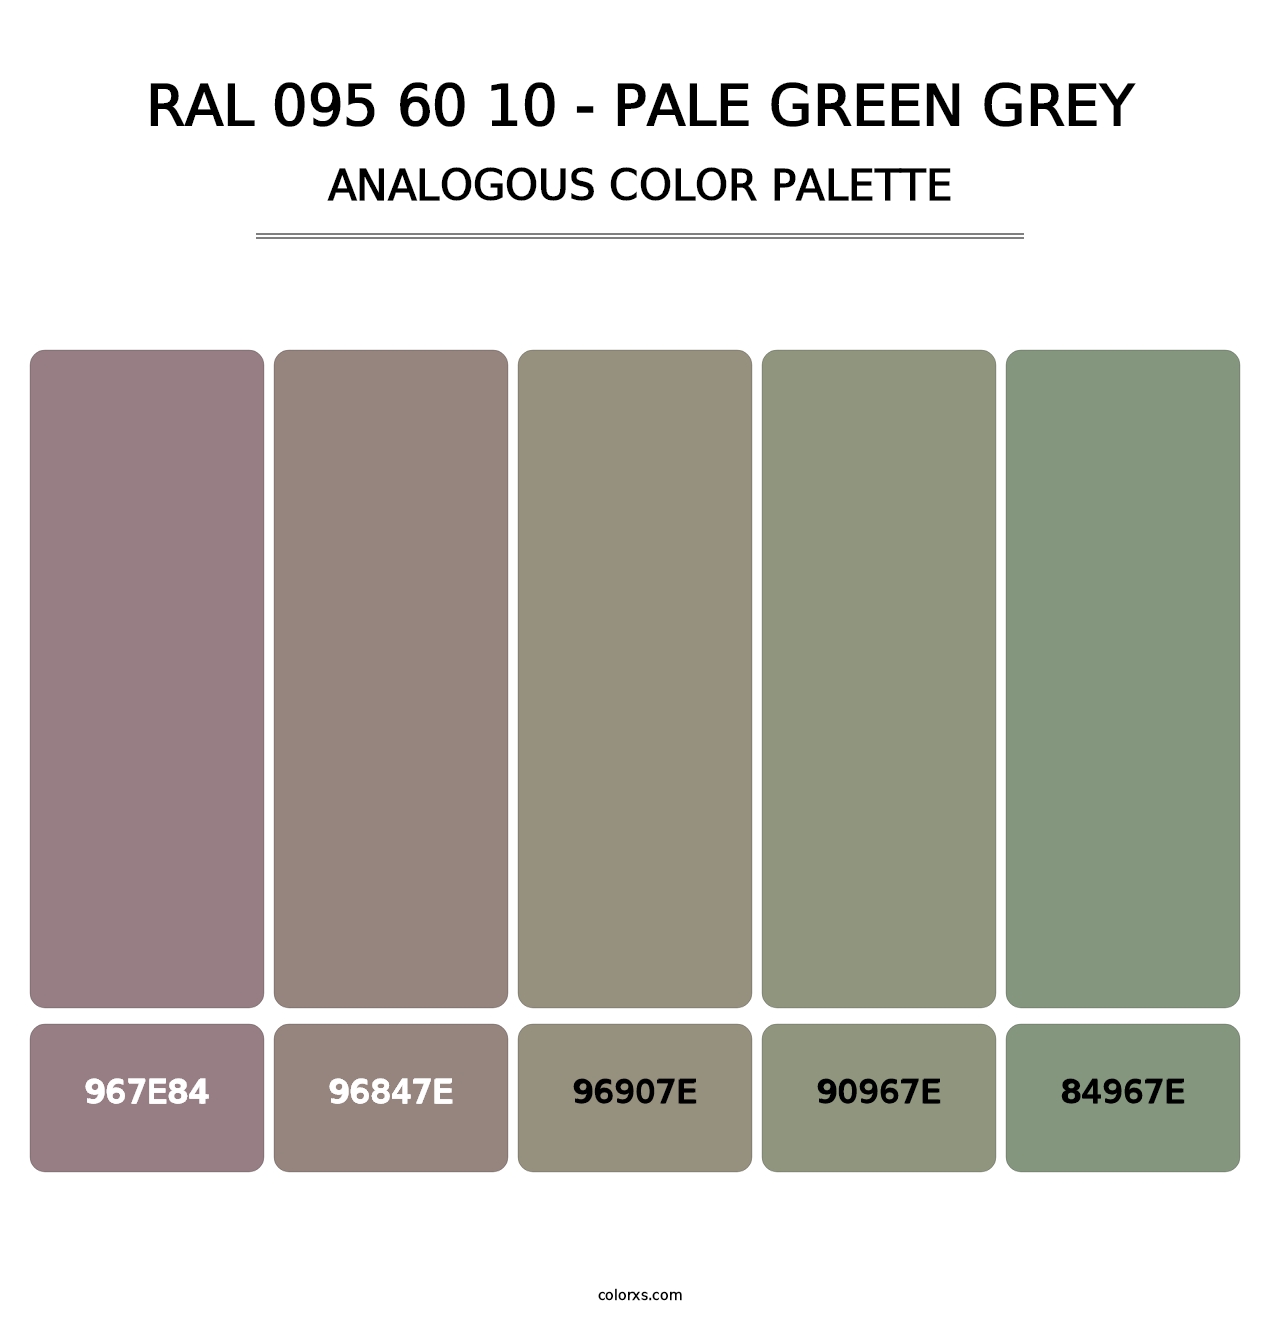 RAL 095 60 10 - Pale Green Grey - Analogous Color Palette